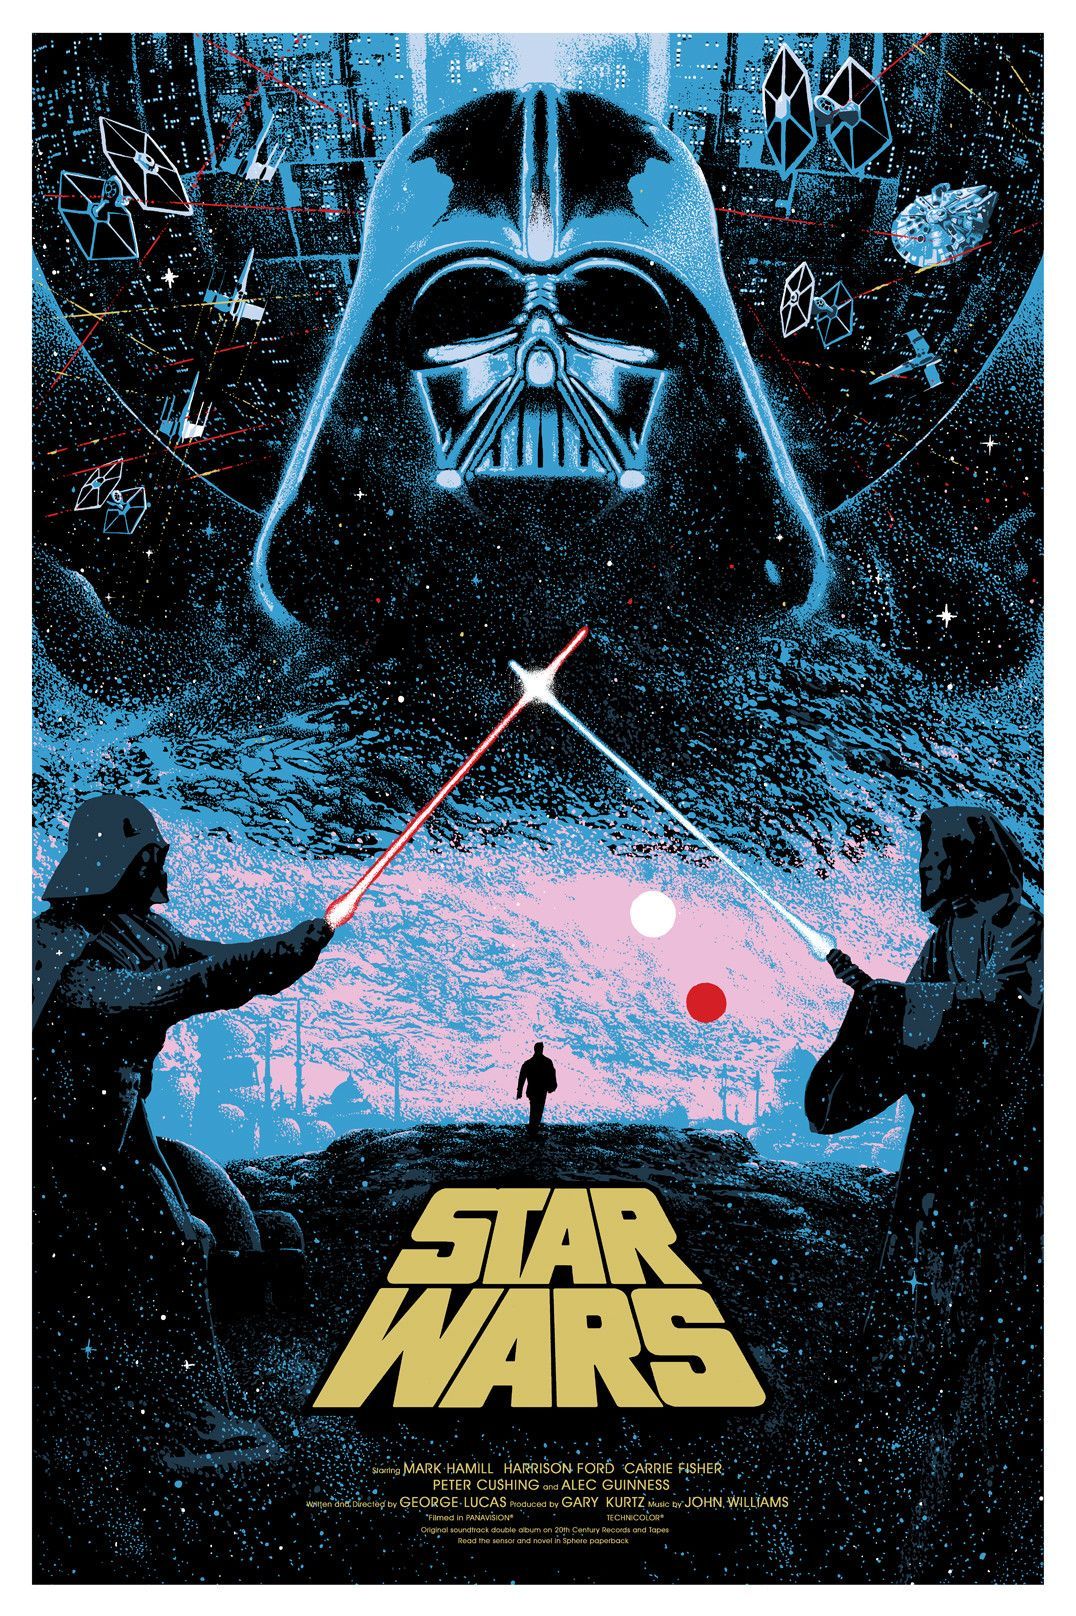 Killian Eng's new Star Wars poster. Star wars art, Star wars fan art, Star wars wallpaper